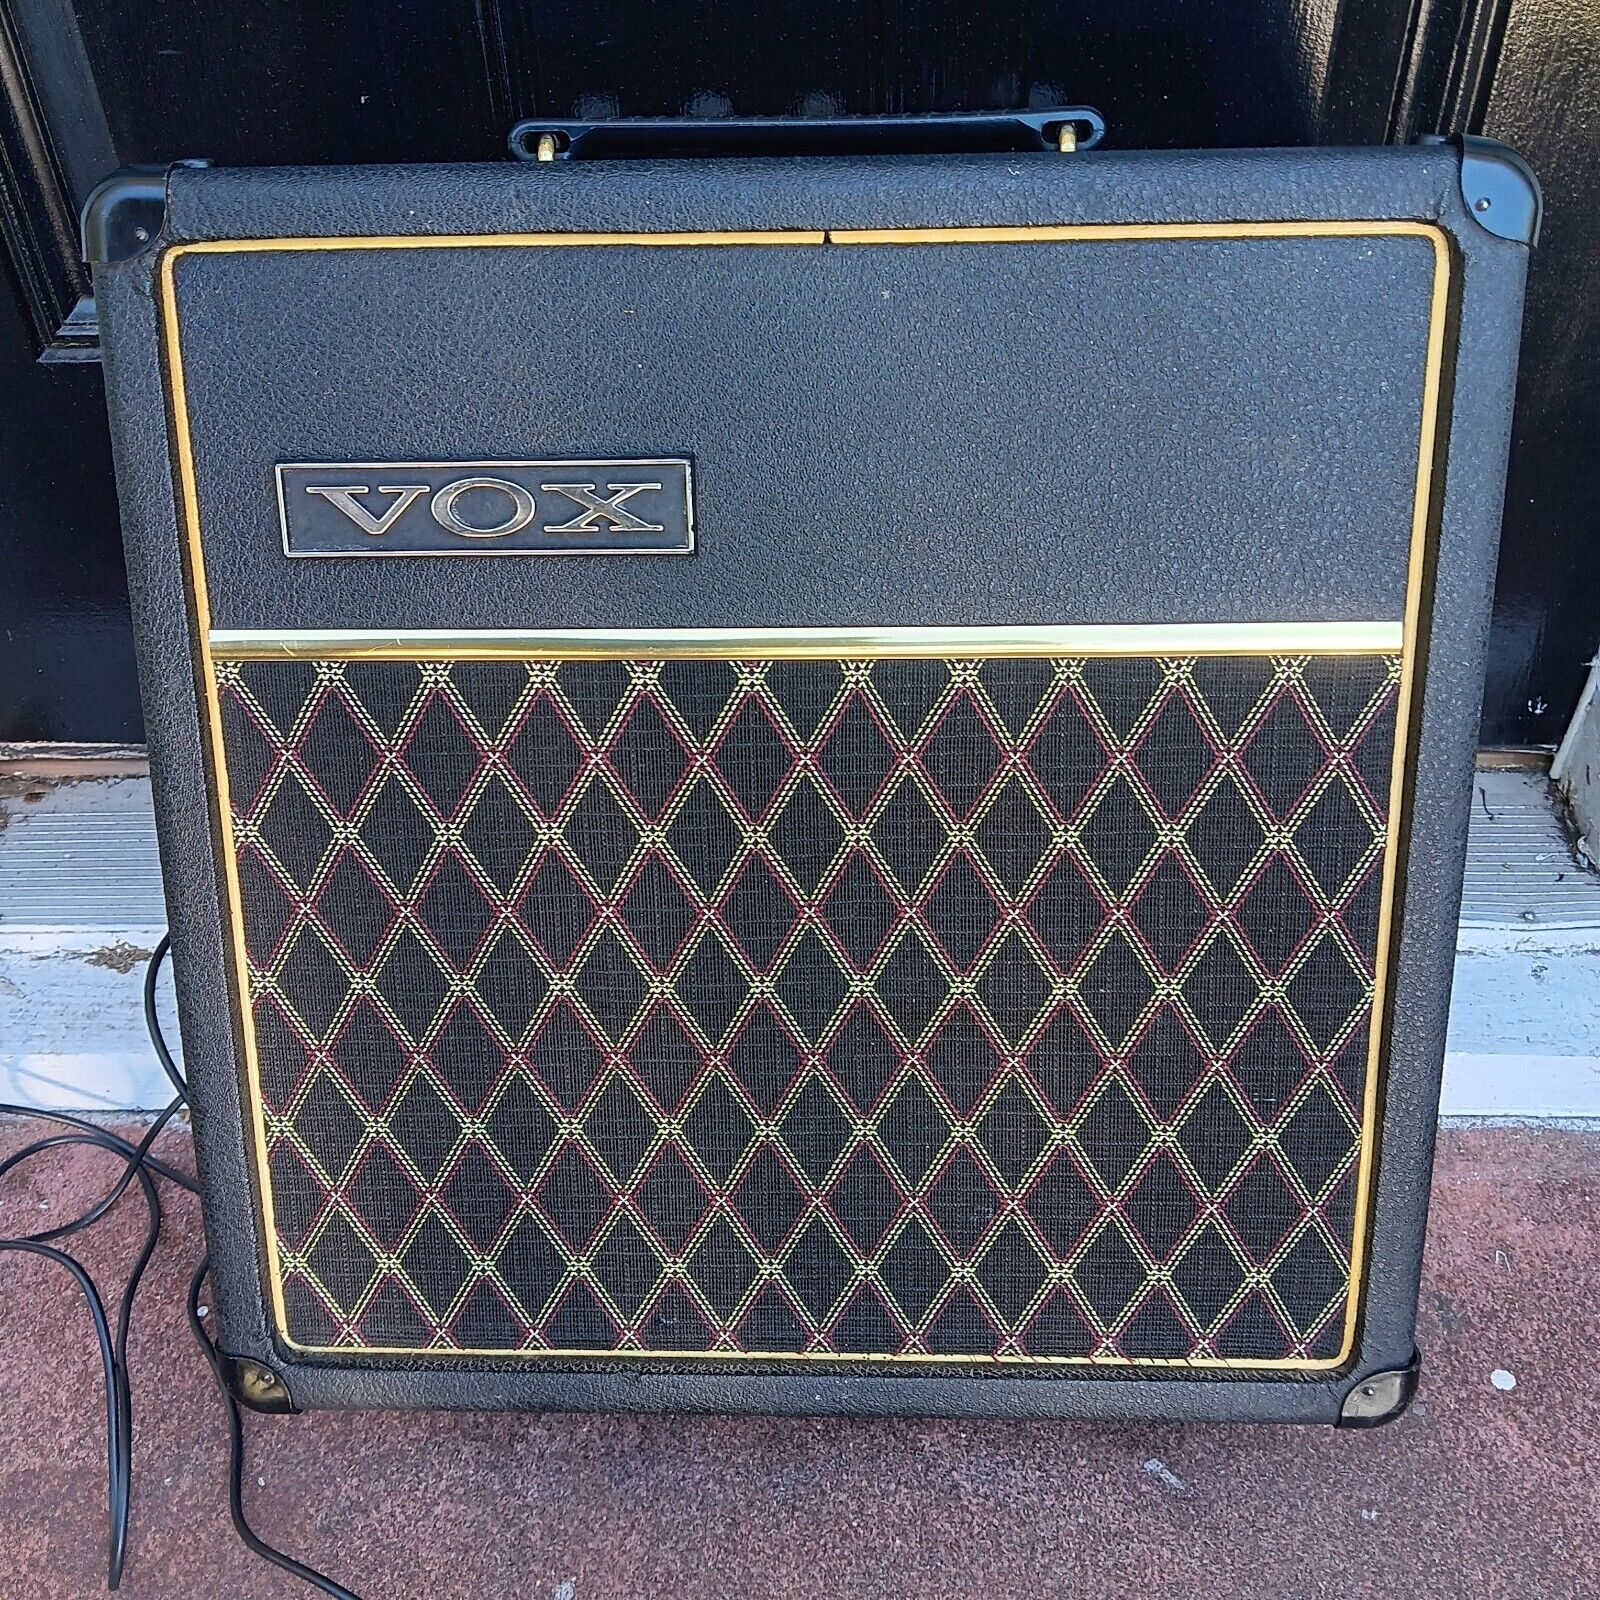 1967 Vox Pathfinder Guitar Amp Original/Working